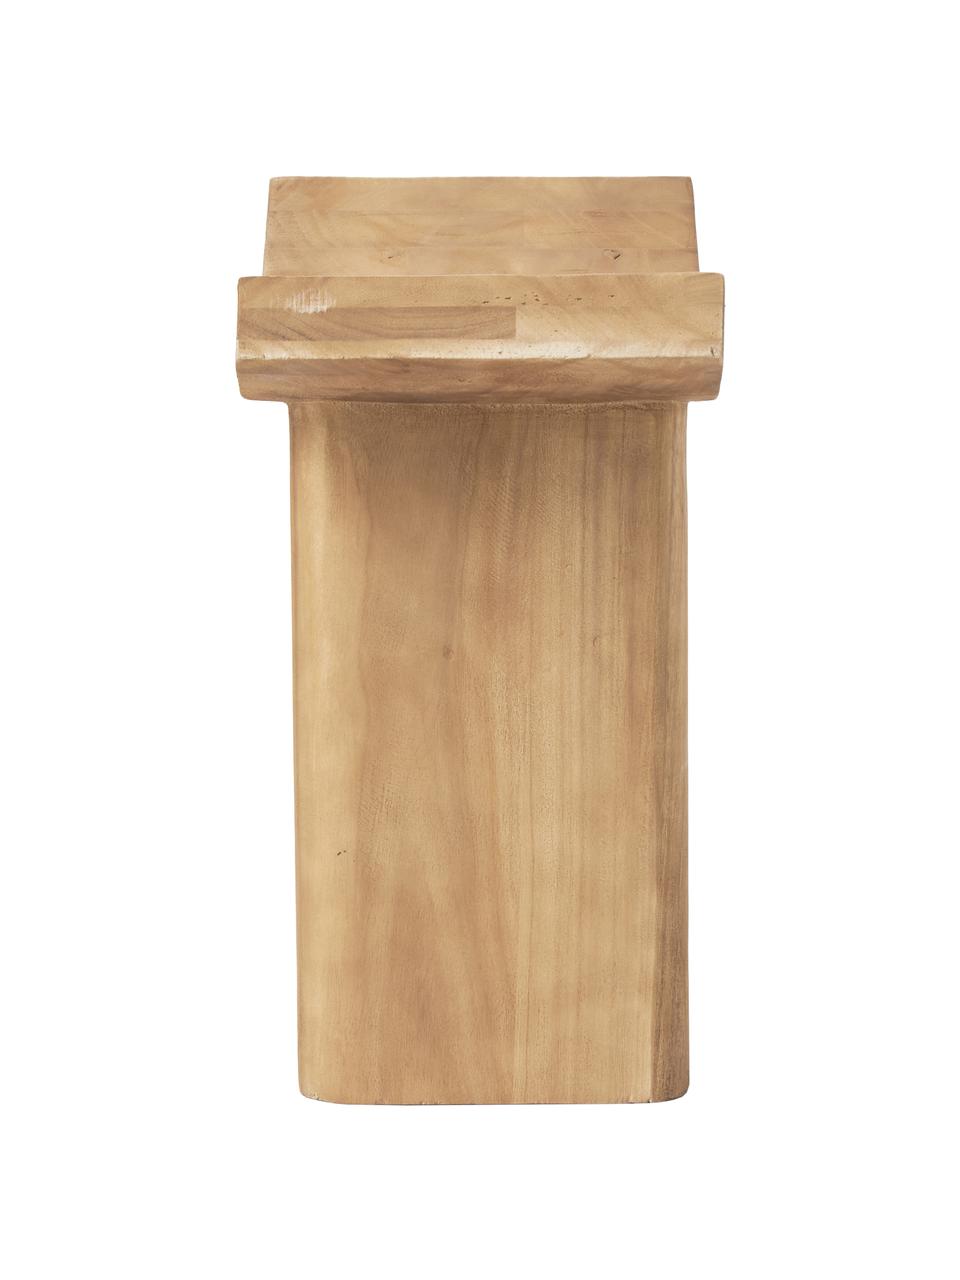 Stolička Japan, Dřevo paulovnie, Béžová, Š 50 cm, V 45 cm